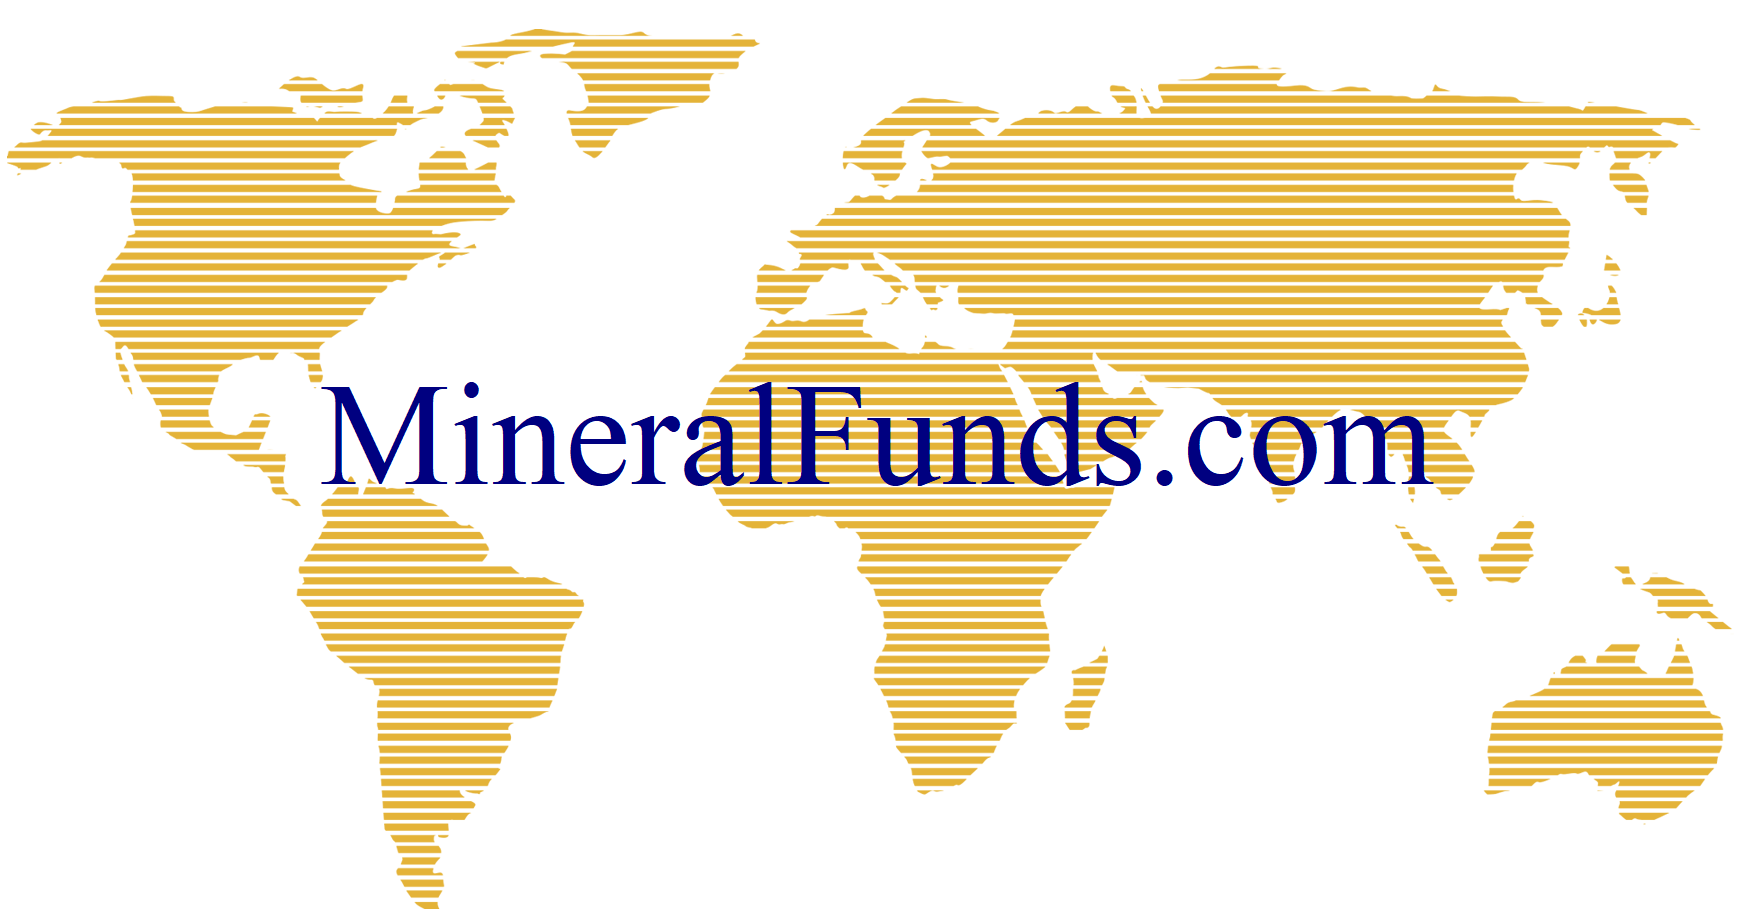 MineralFunds.com